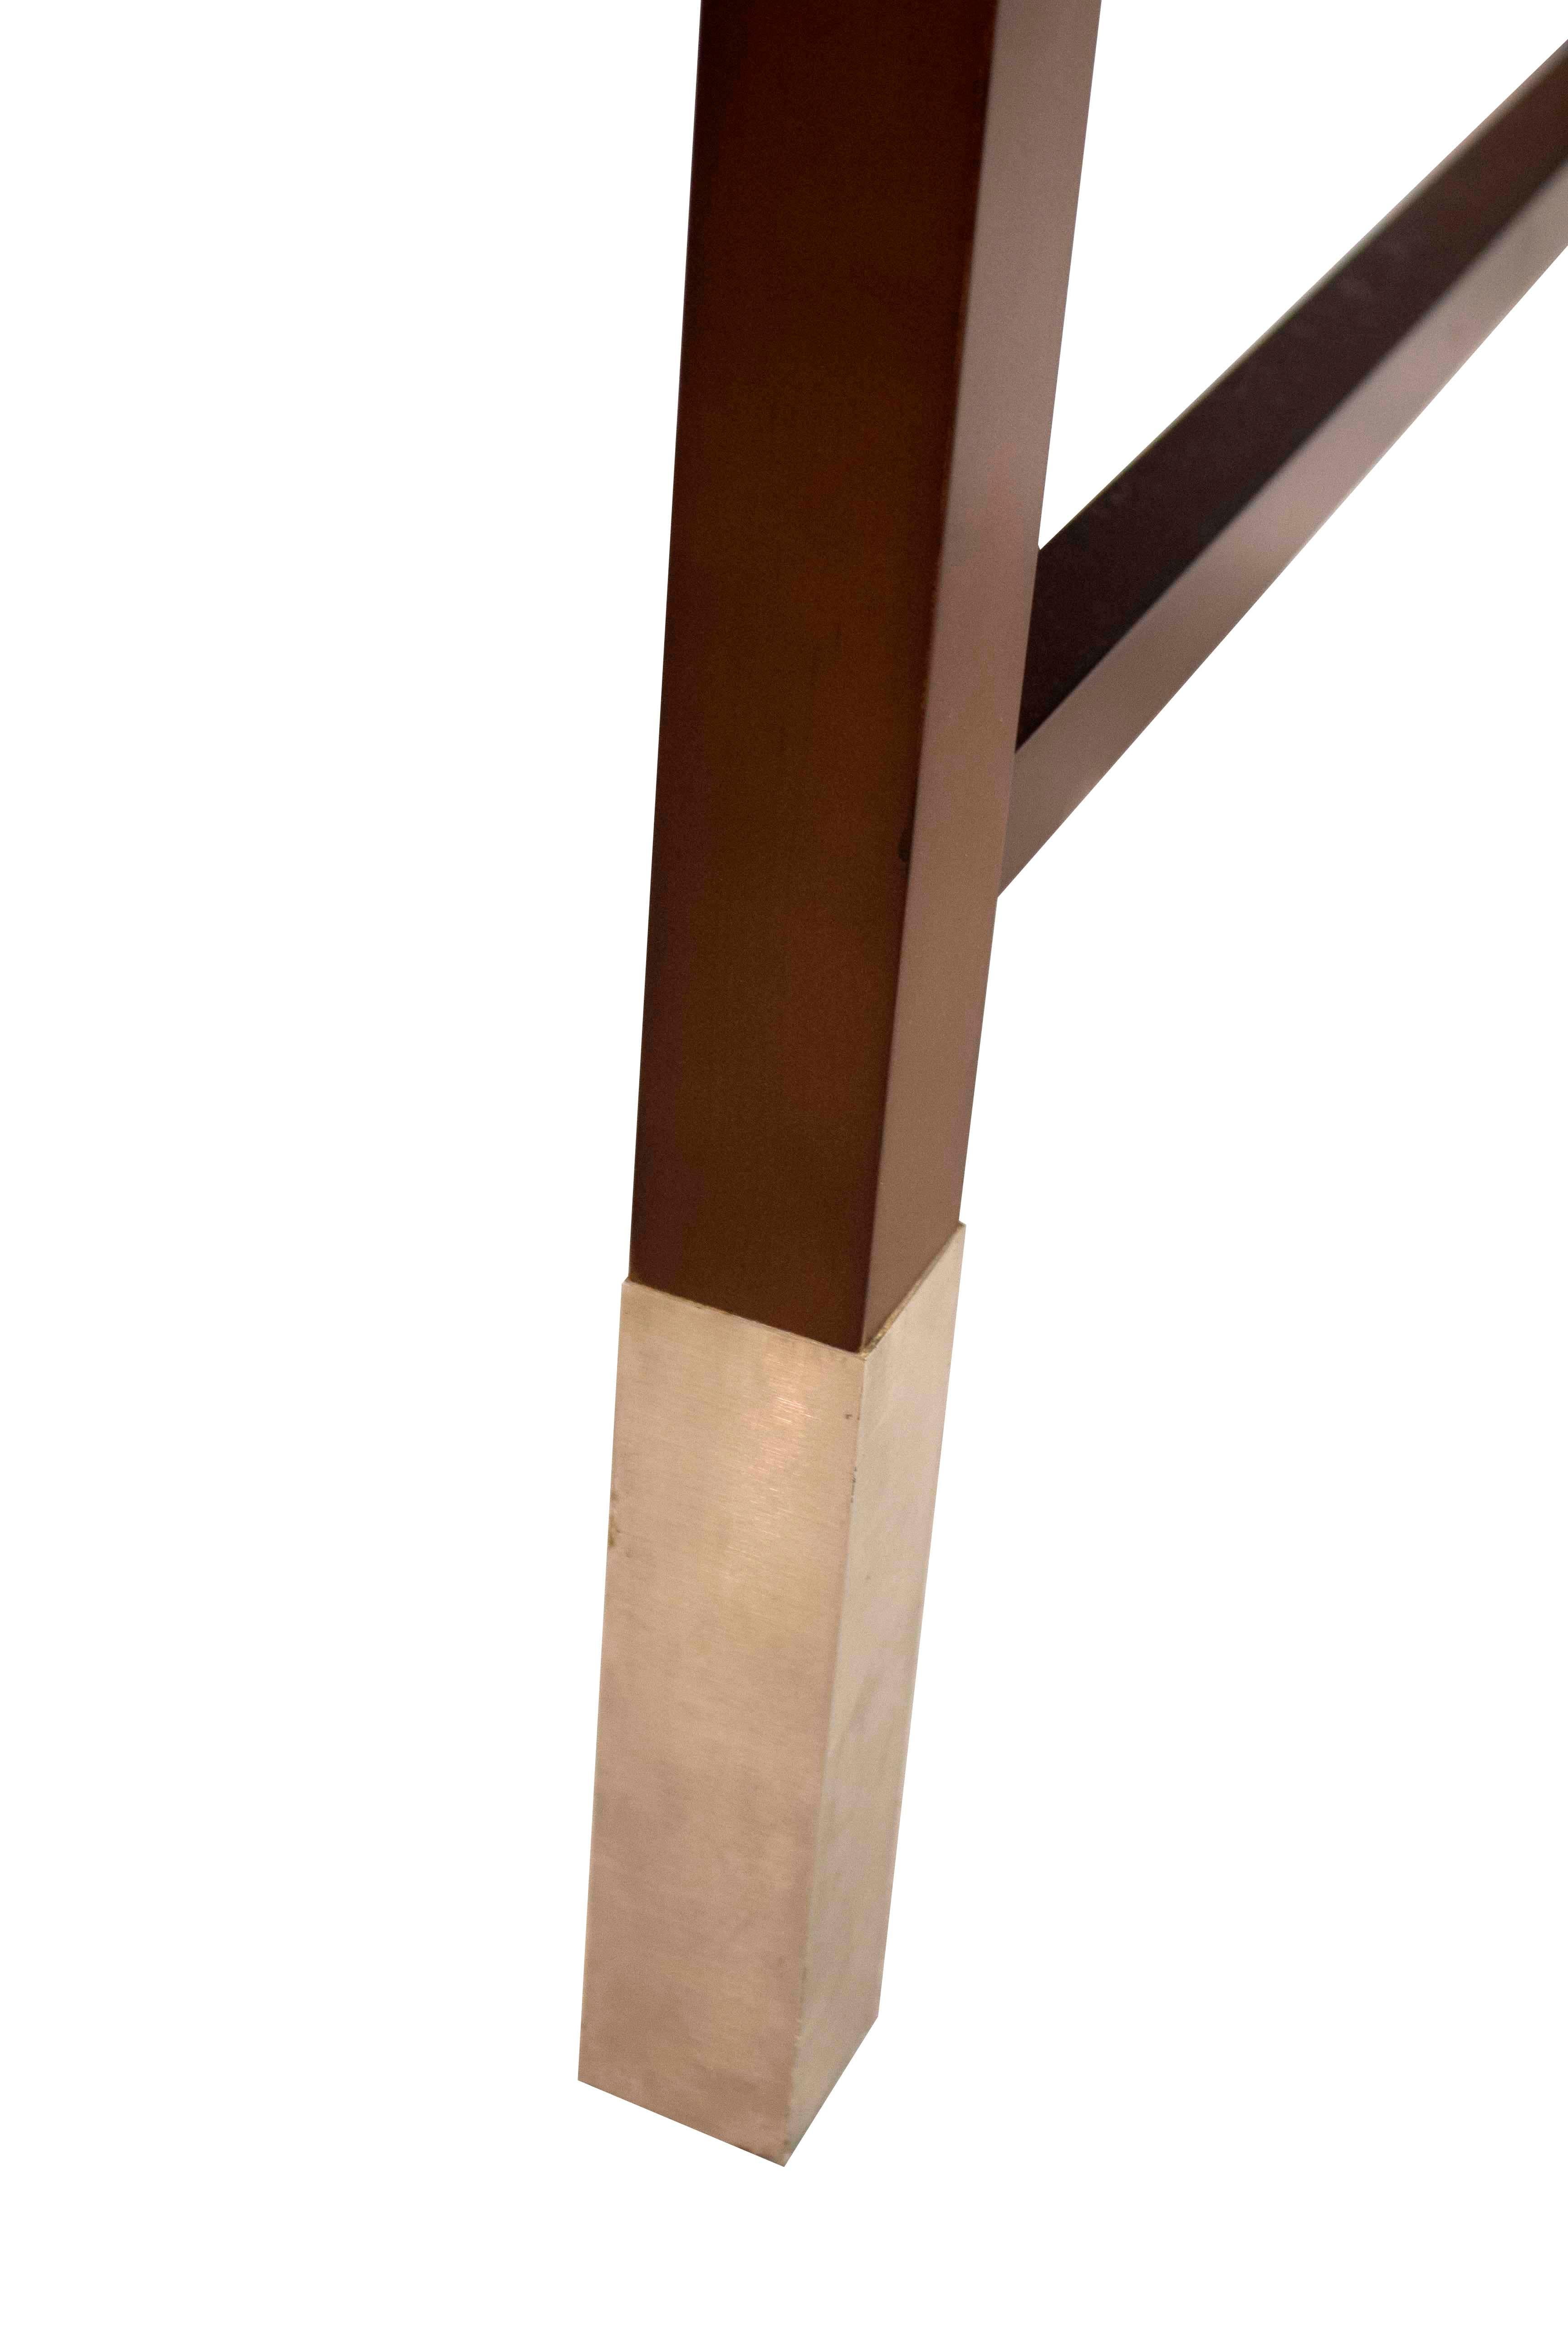 Donghia Wood & Chrome Parsons Style Desk 5